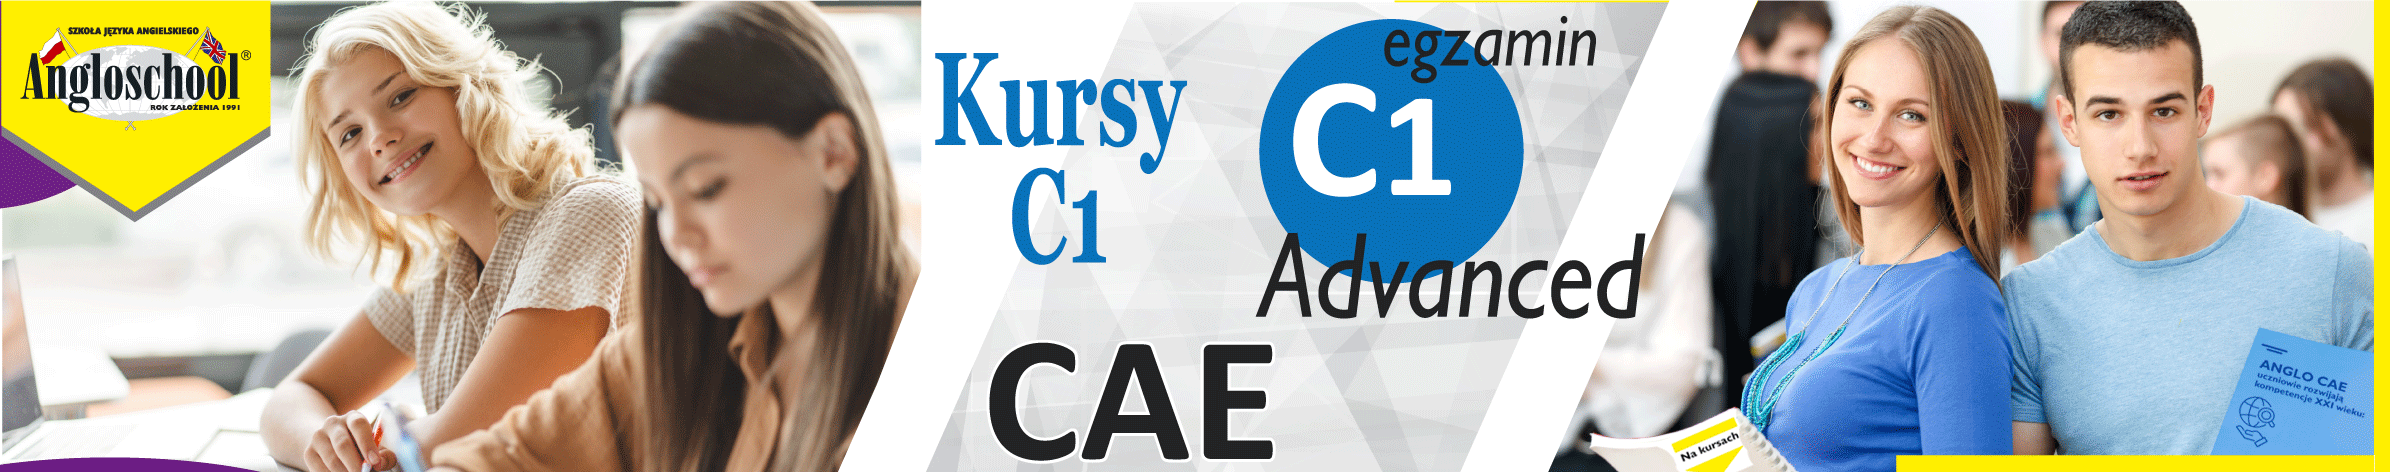 Kurs (CAE) C1 Advanced w Angloschool